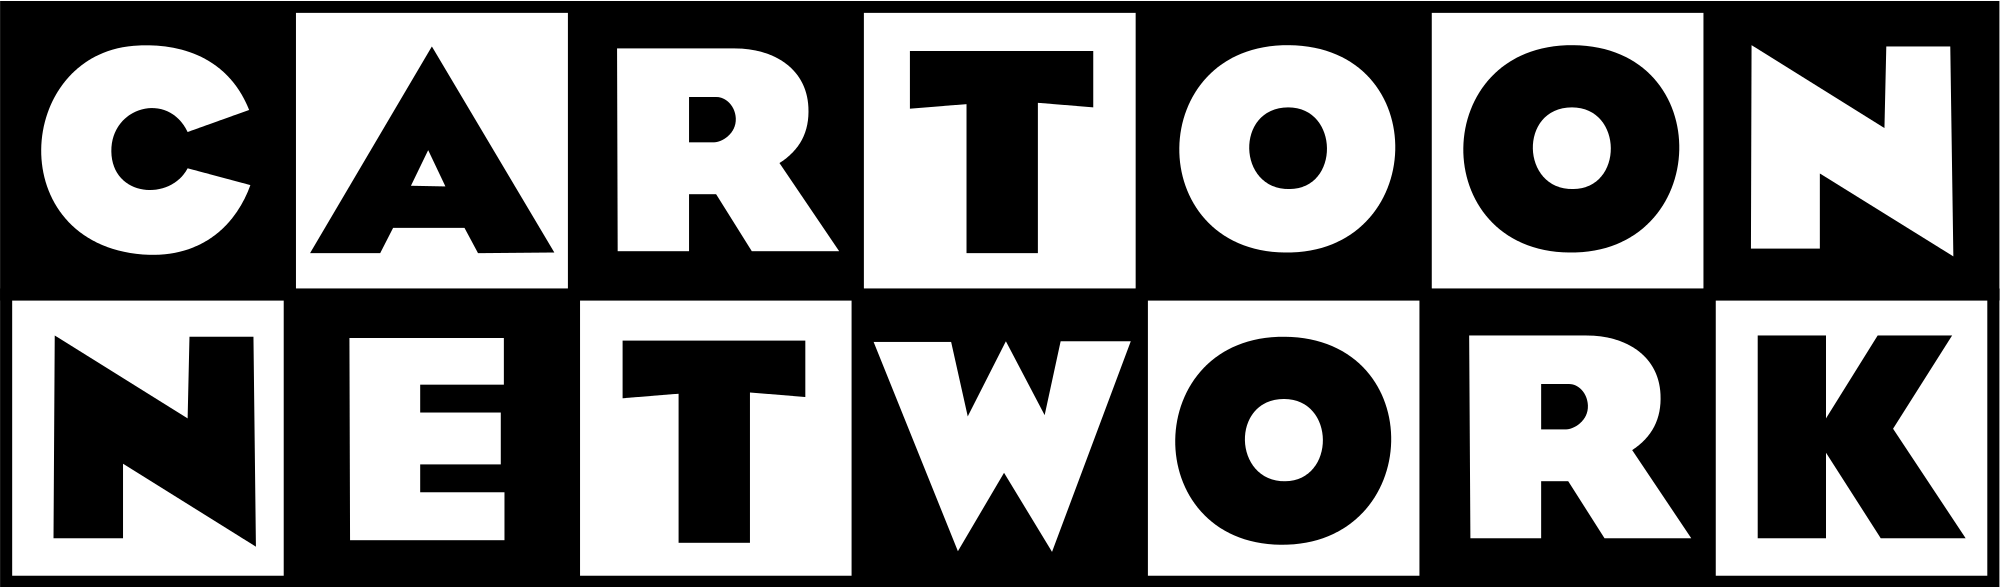 Cartoon Network Old Logo - File:Cartoon Network 1992 logo.svg - Wikimedia Commons